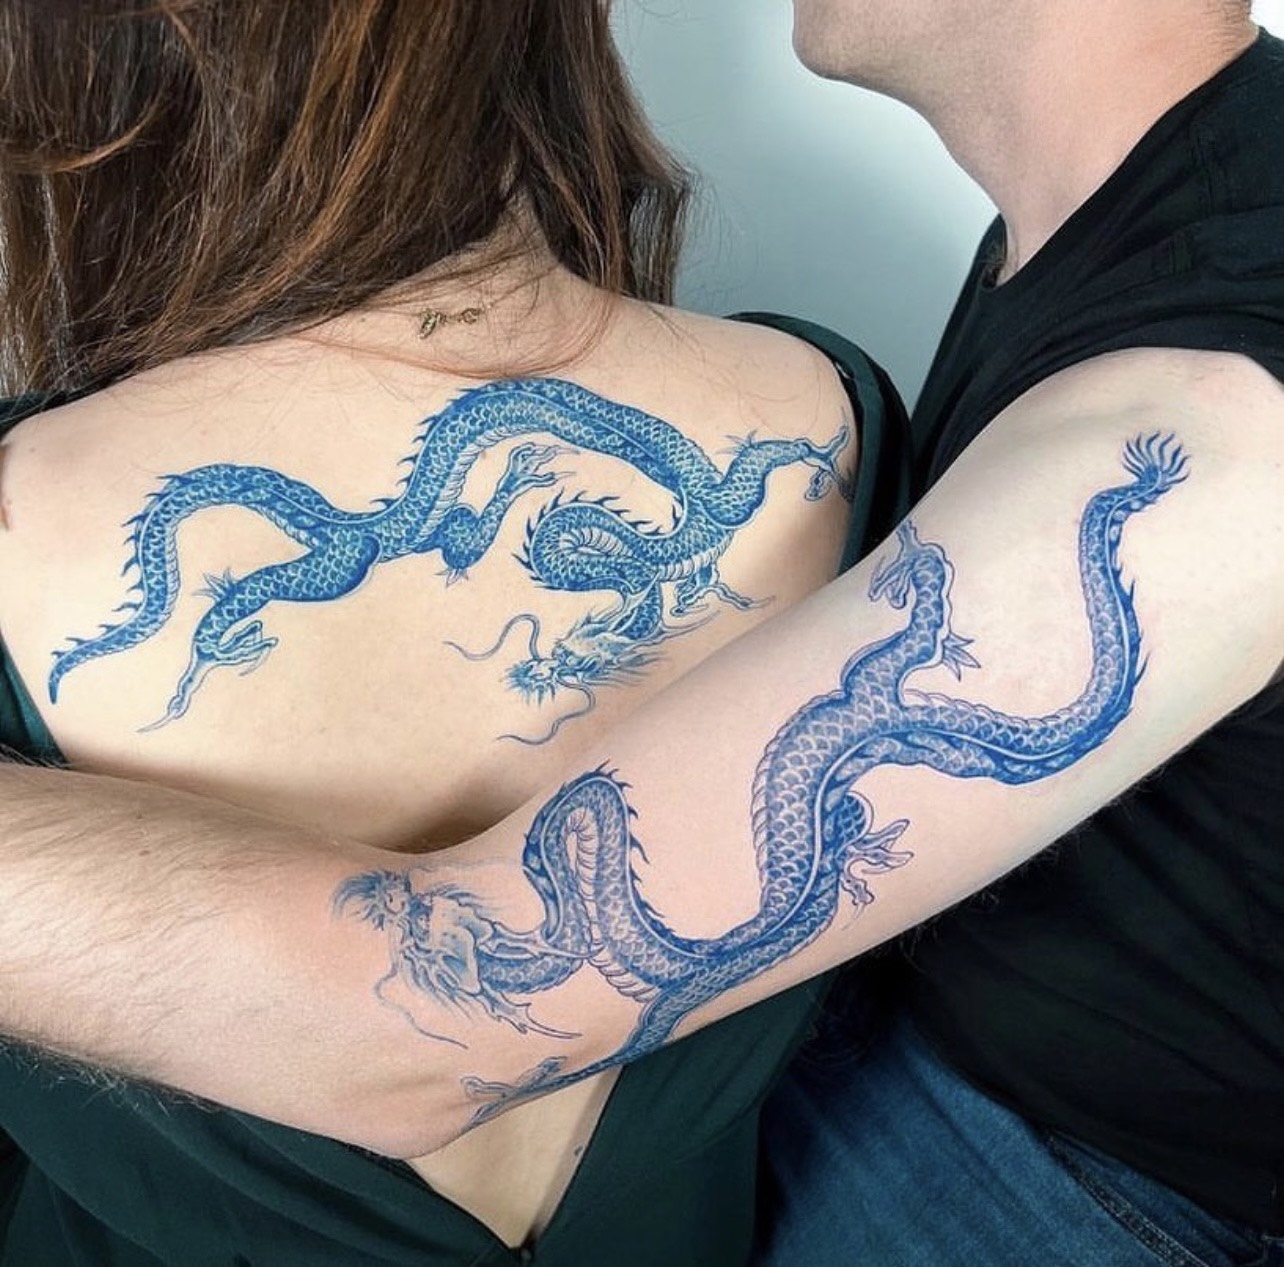 Fine Line Tattoos & Other Tattoo Ideas for Women - Iron & Ink Tattoo